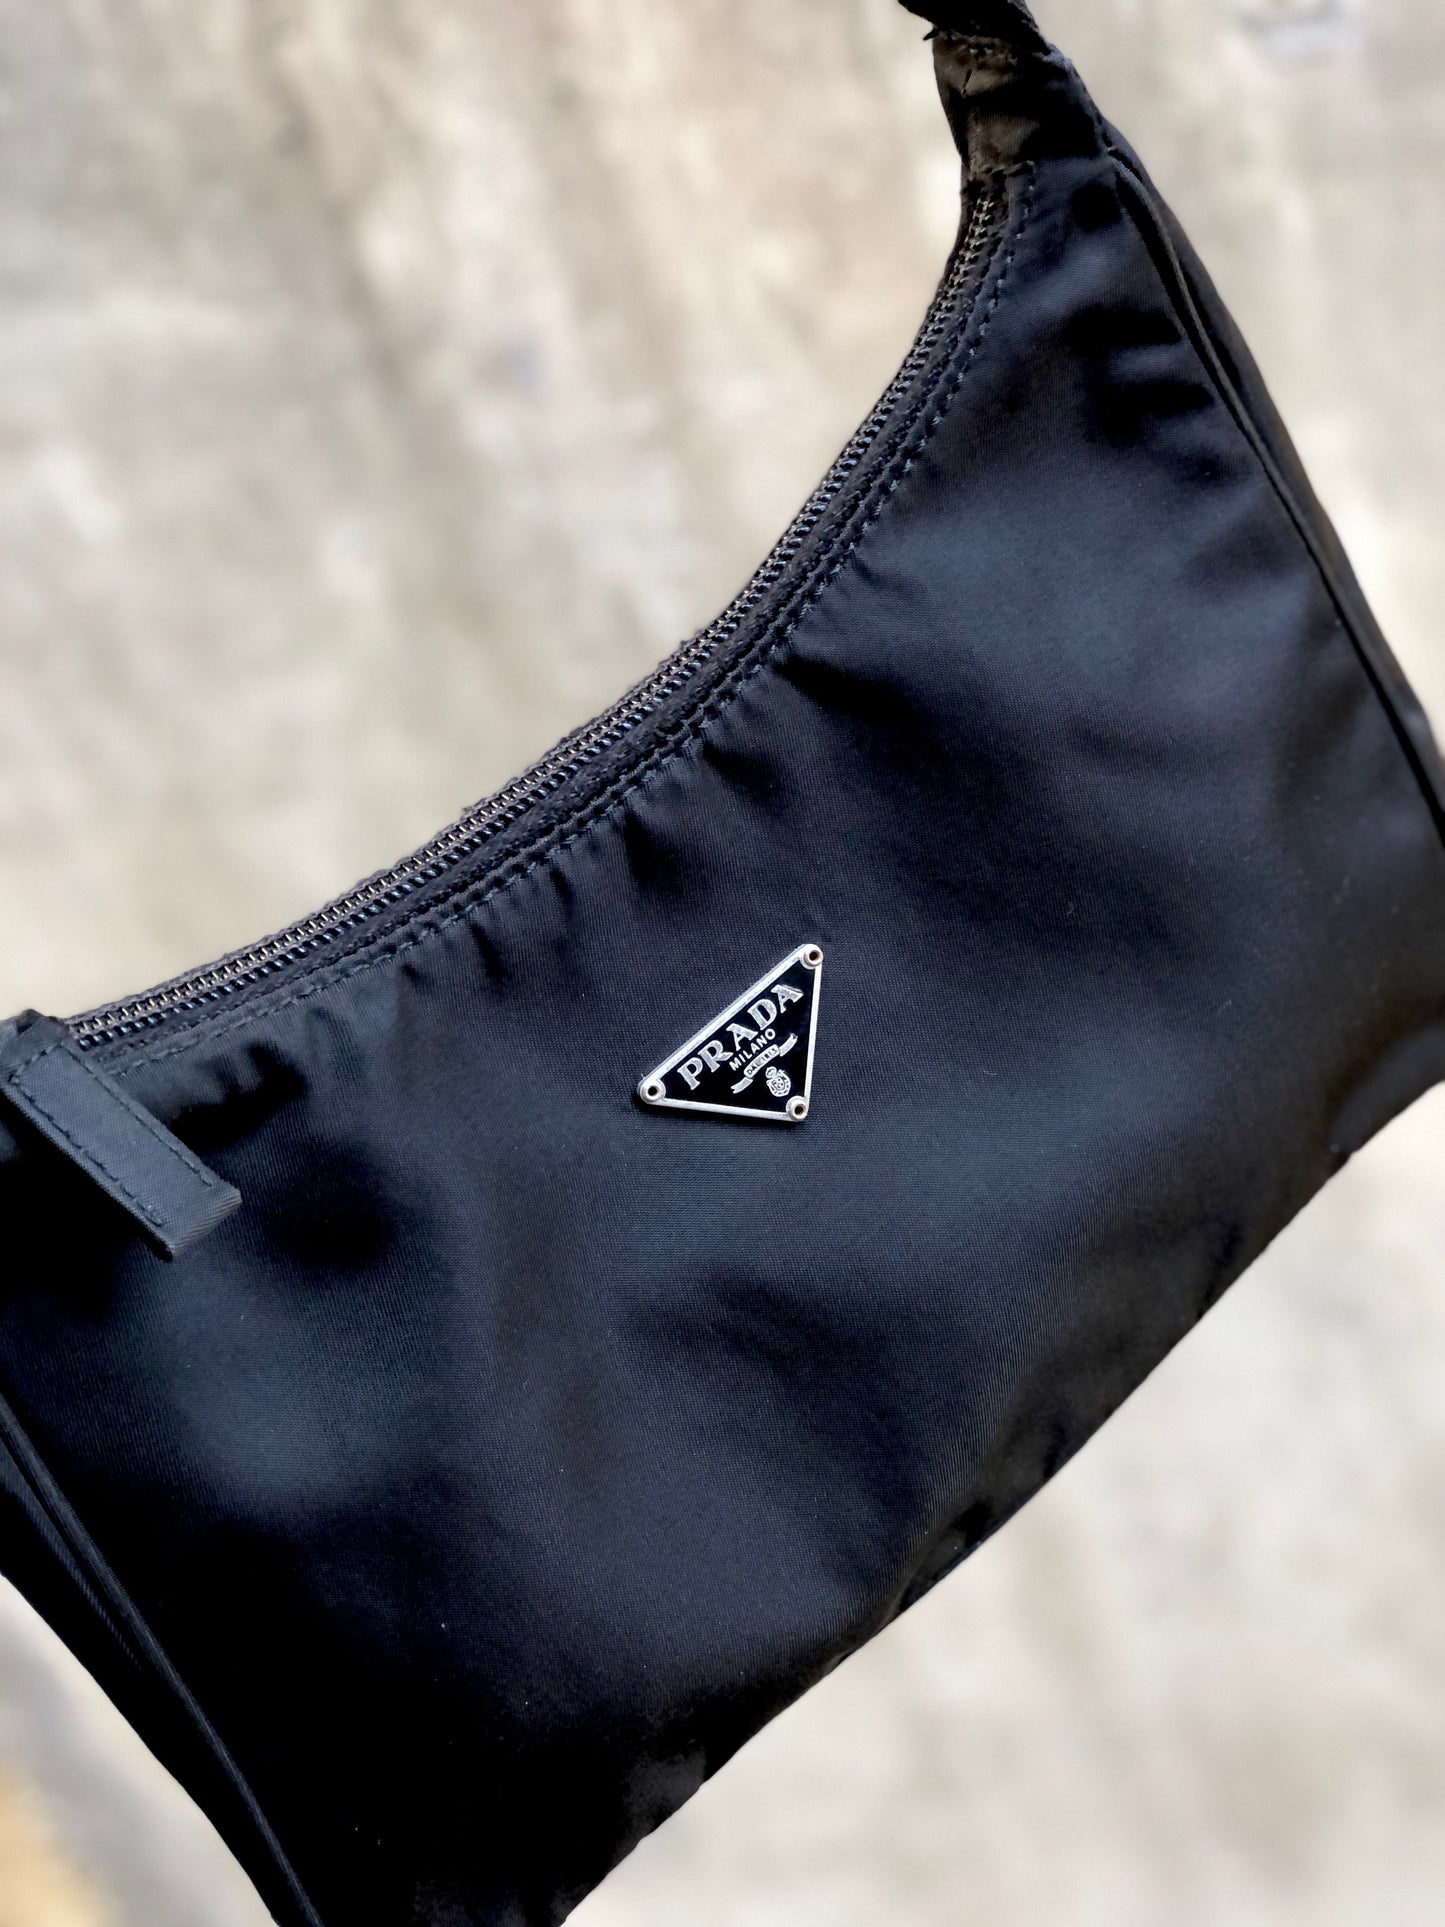 PRADA Triangle logo Nylon Handbag Hobo bag Black Vintage ajhrhr